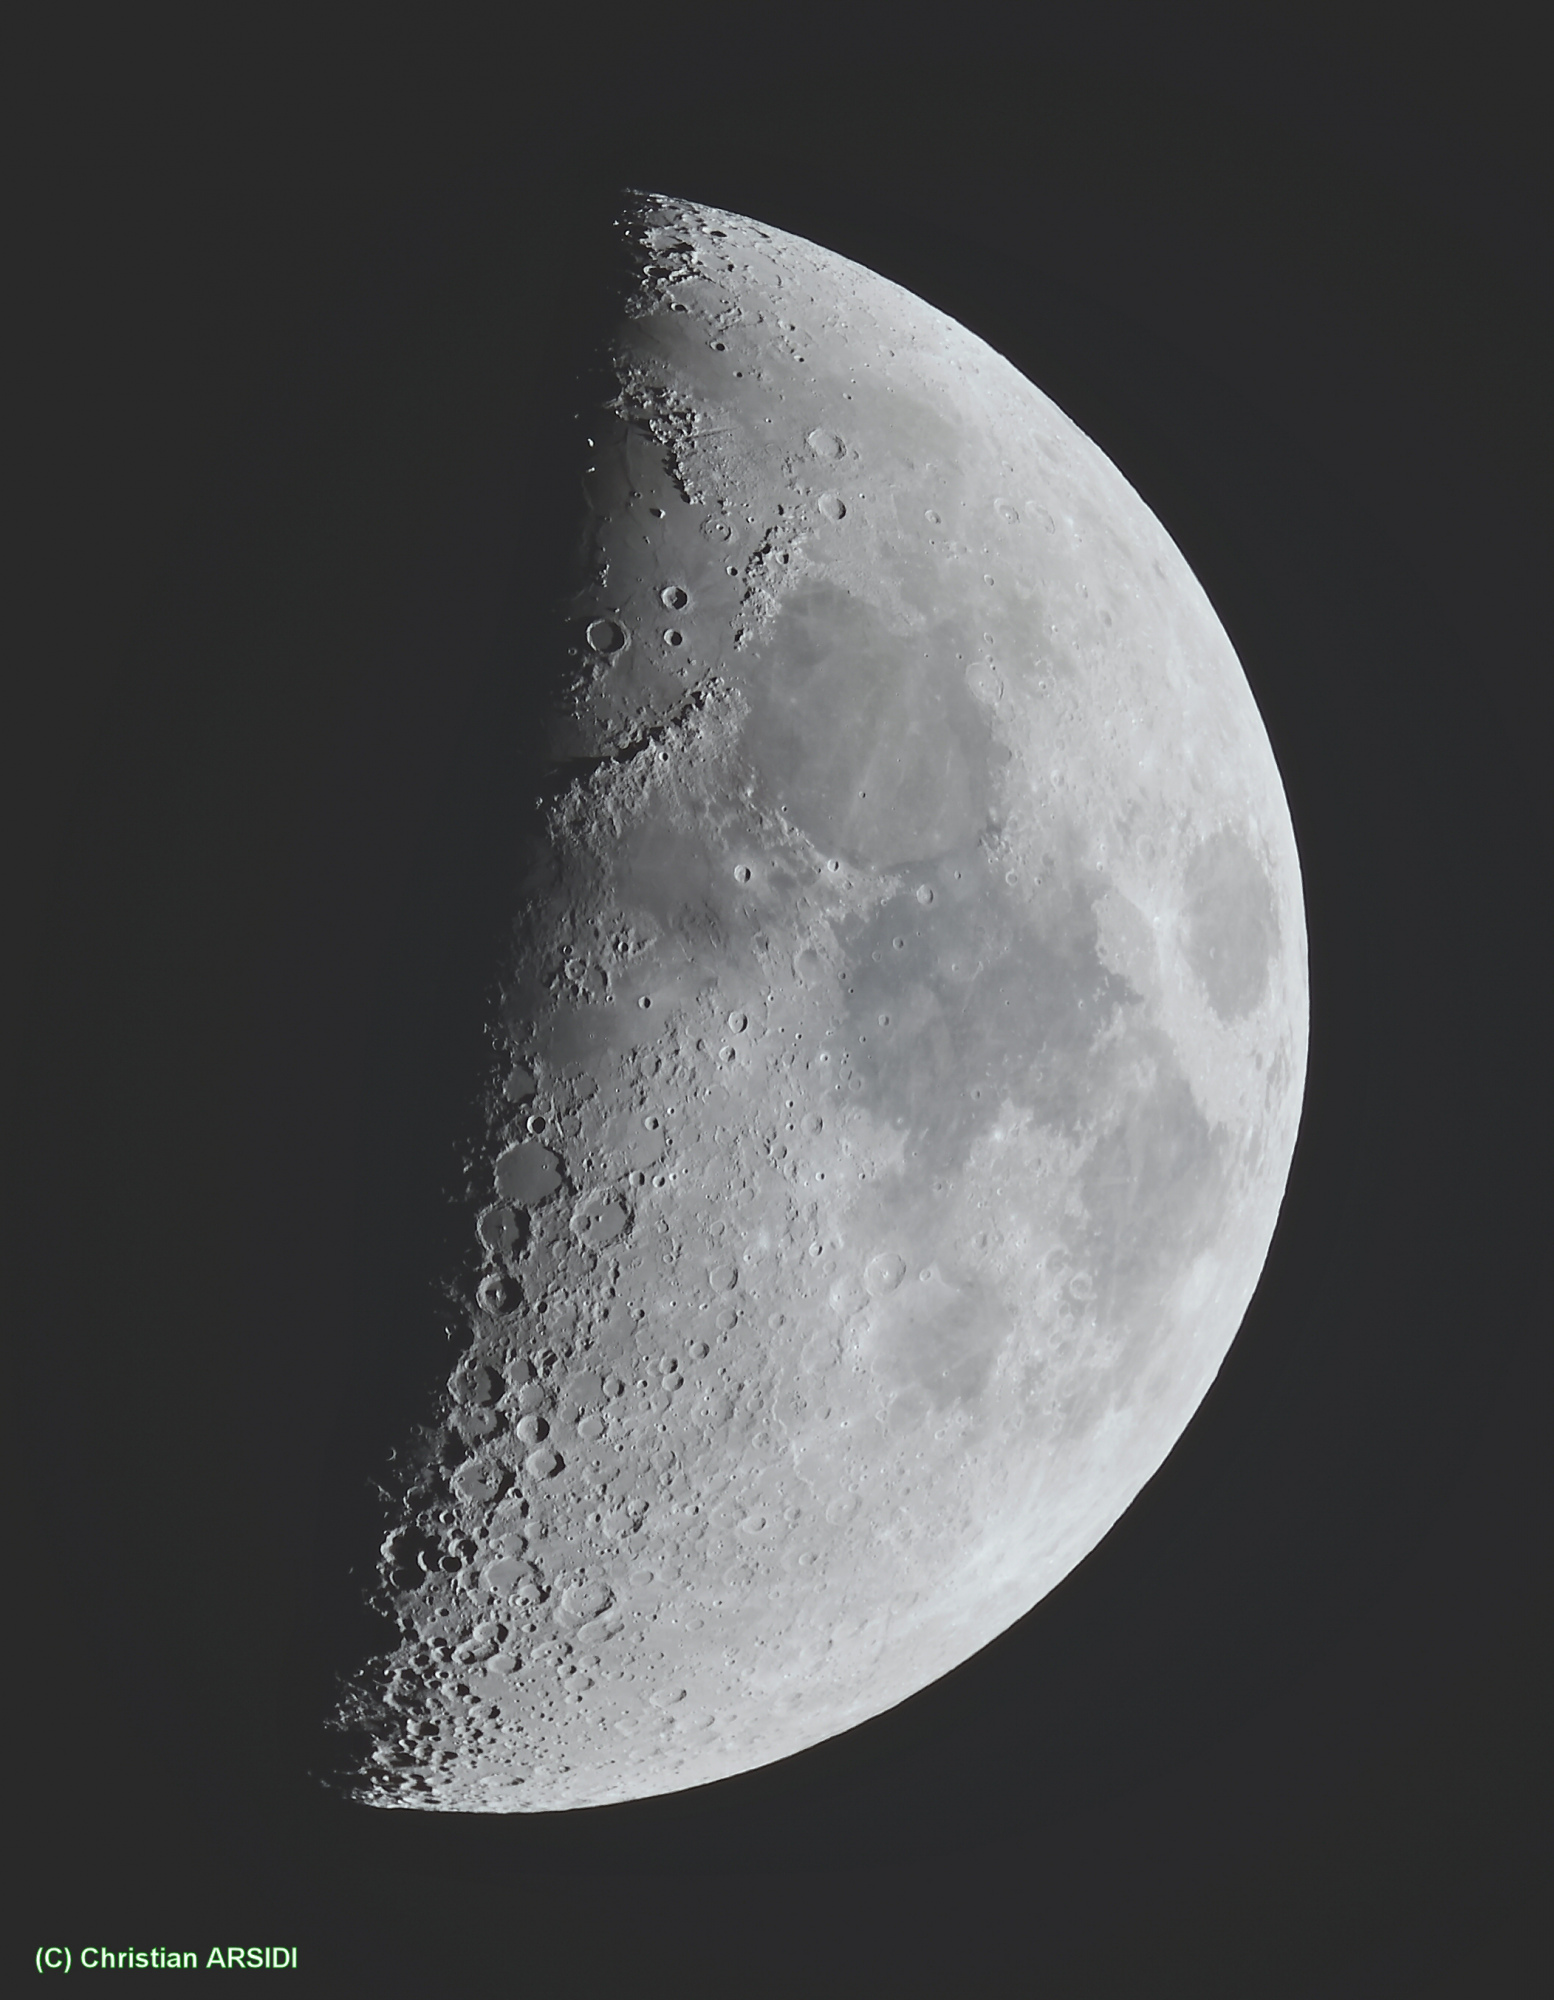 La Lune 21 images_DxO BV CA JPEG.jpg